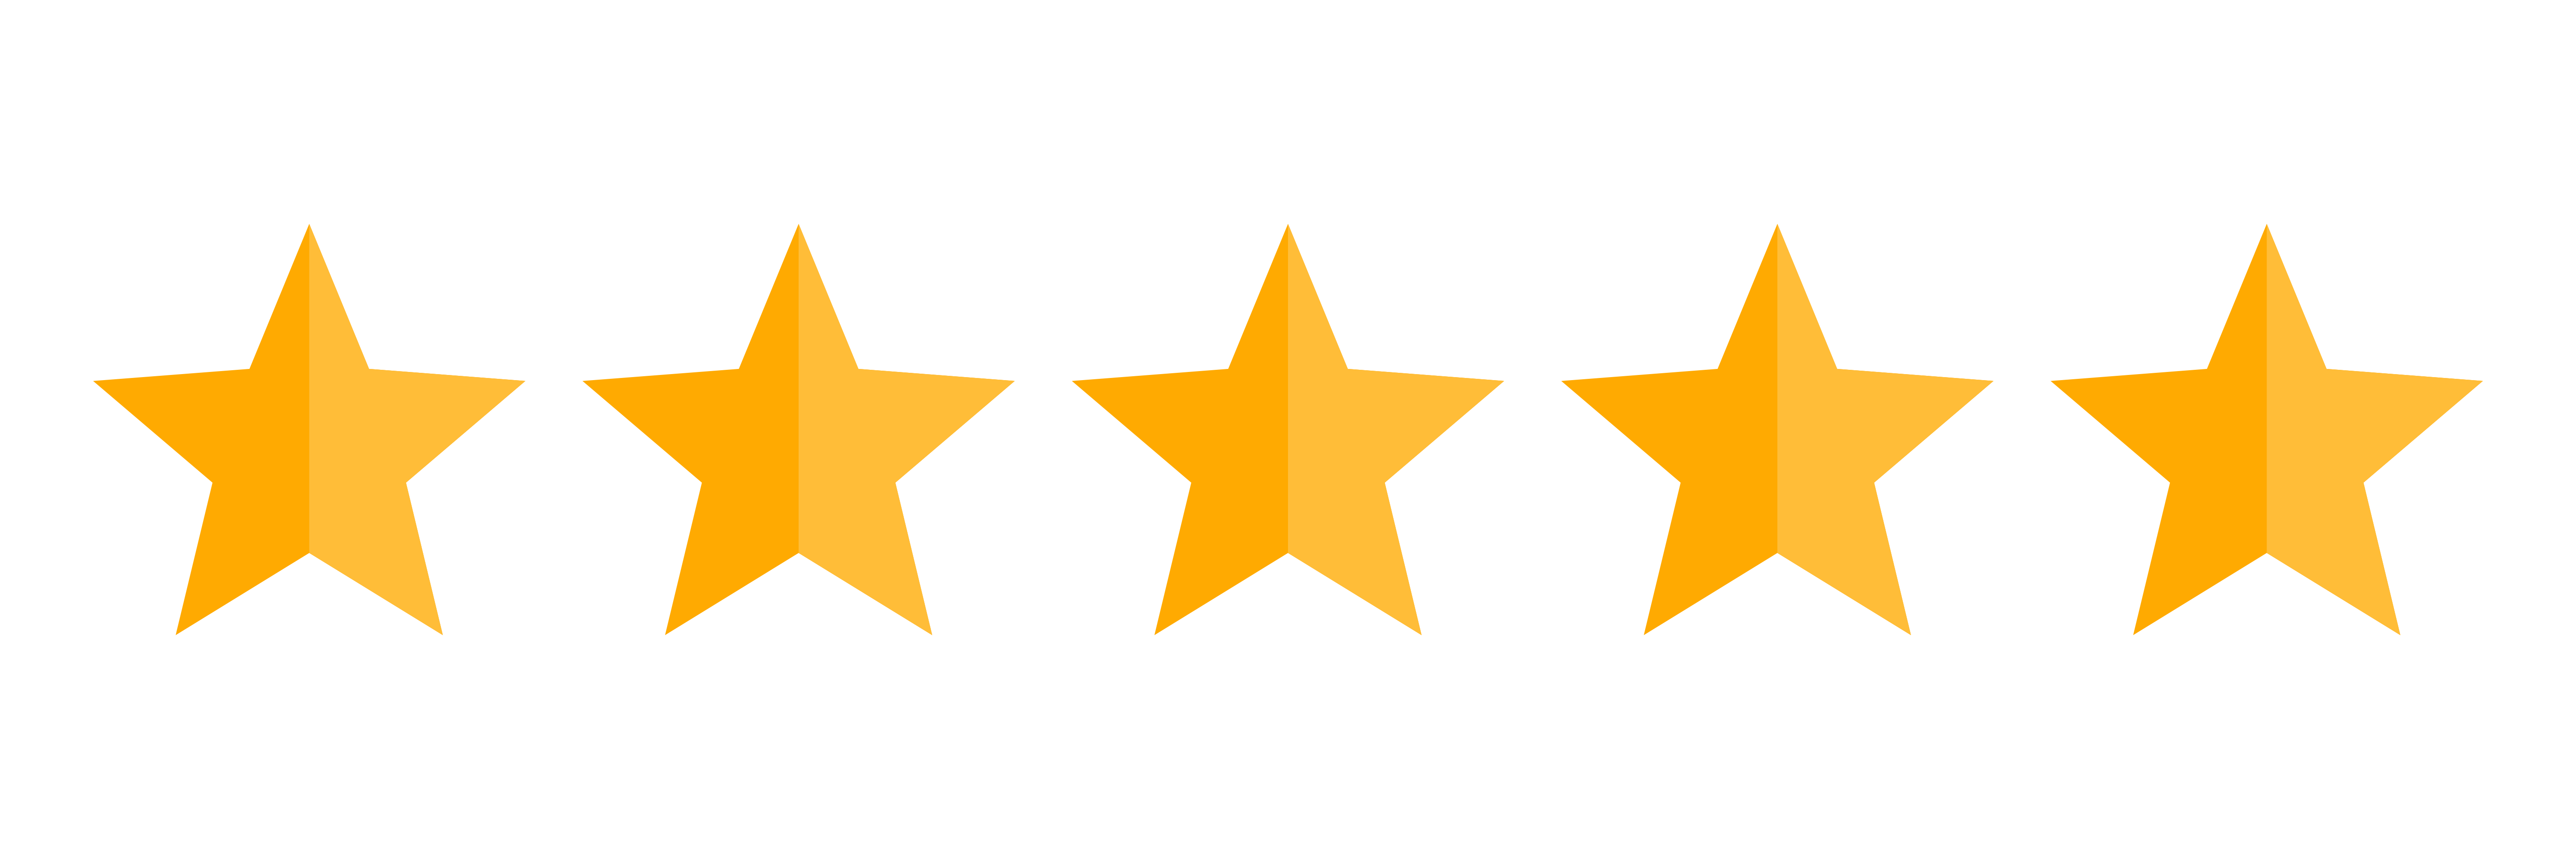 5 Star reviews